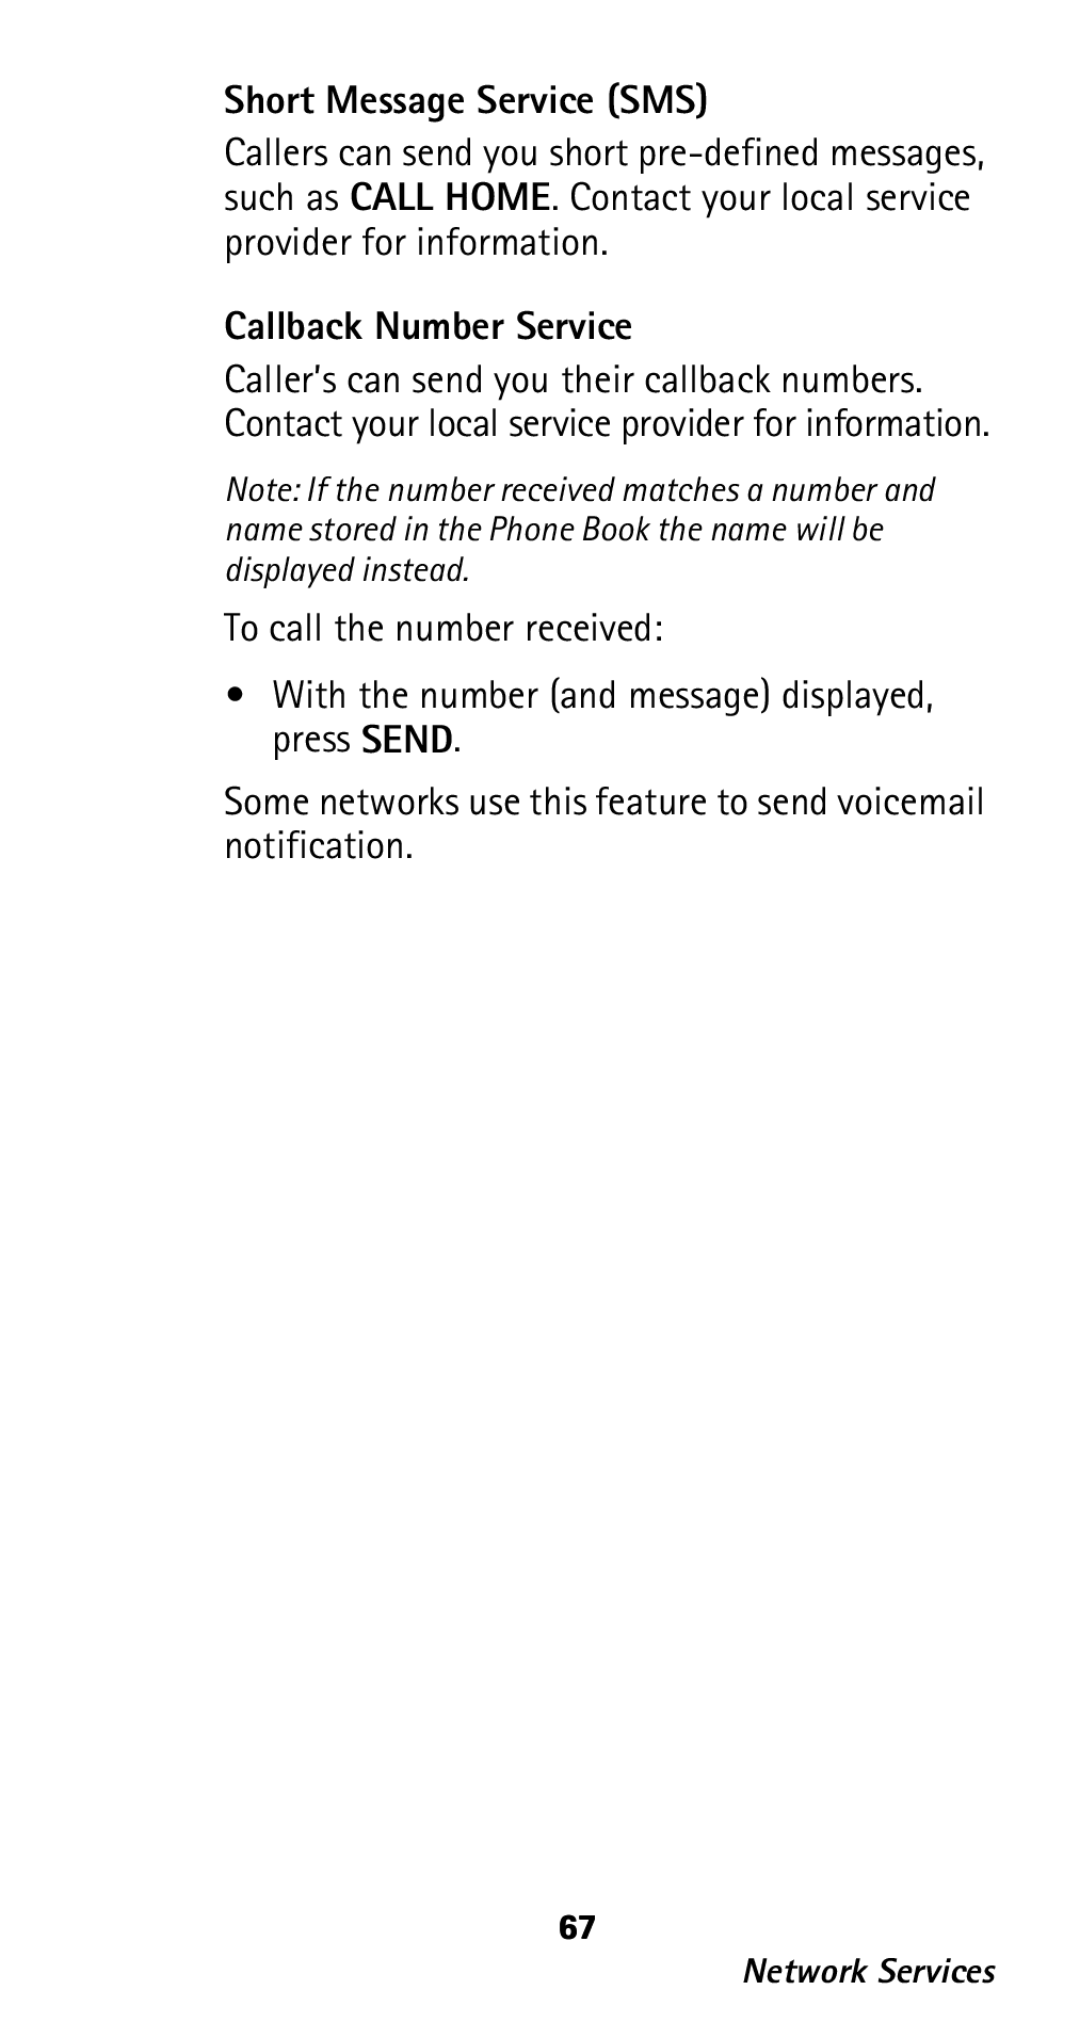 Nokia 282 owner manual Short Message Service SMS, Callback Number Service 